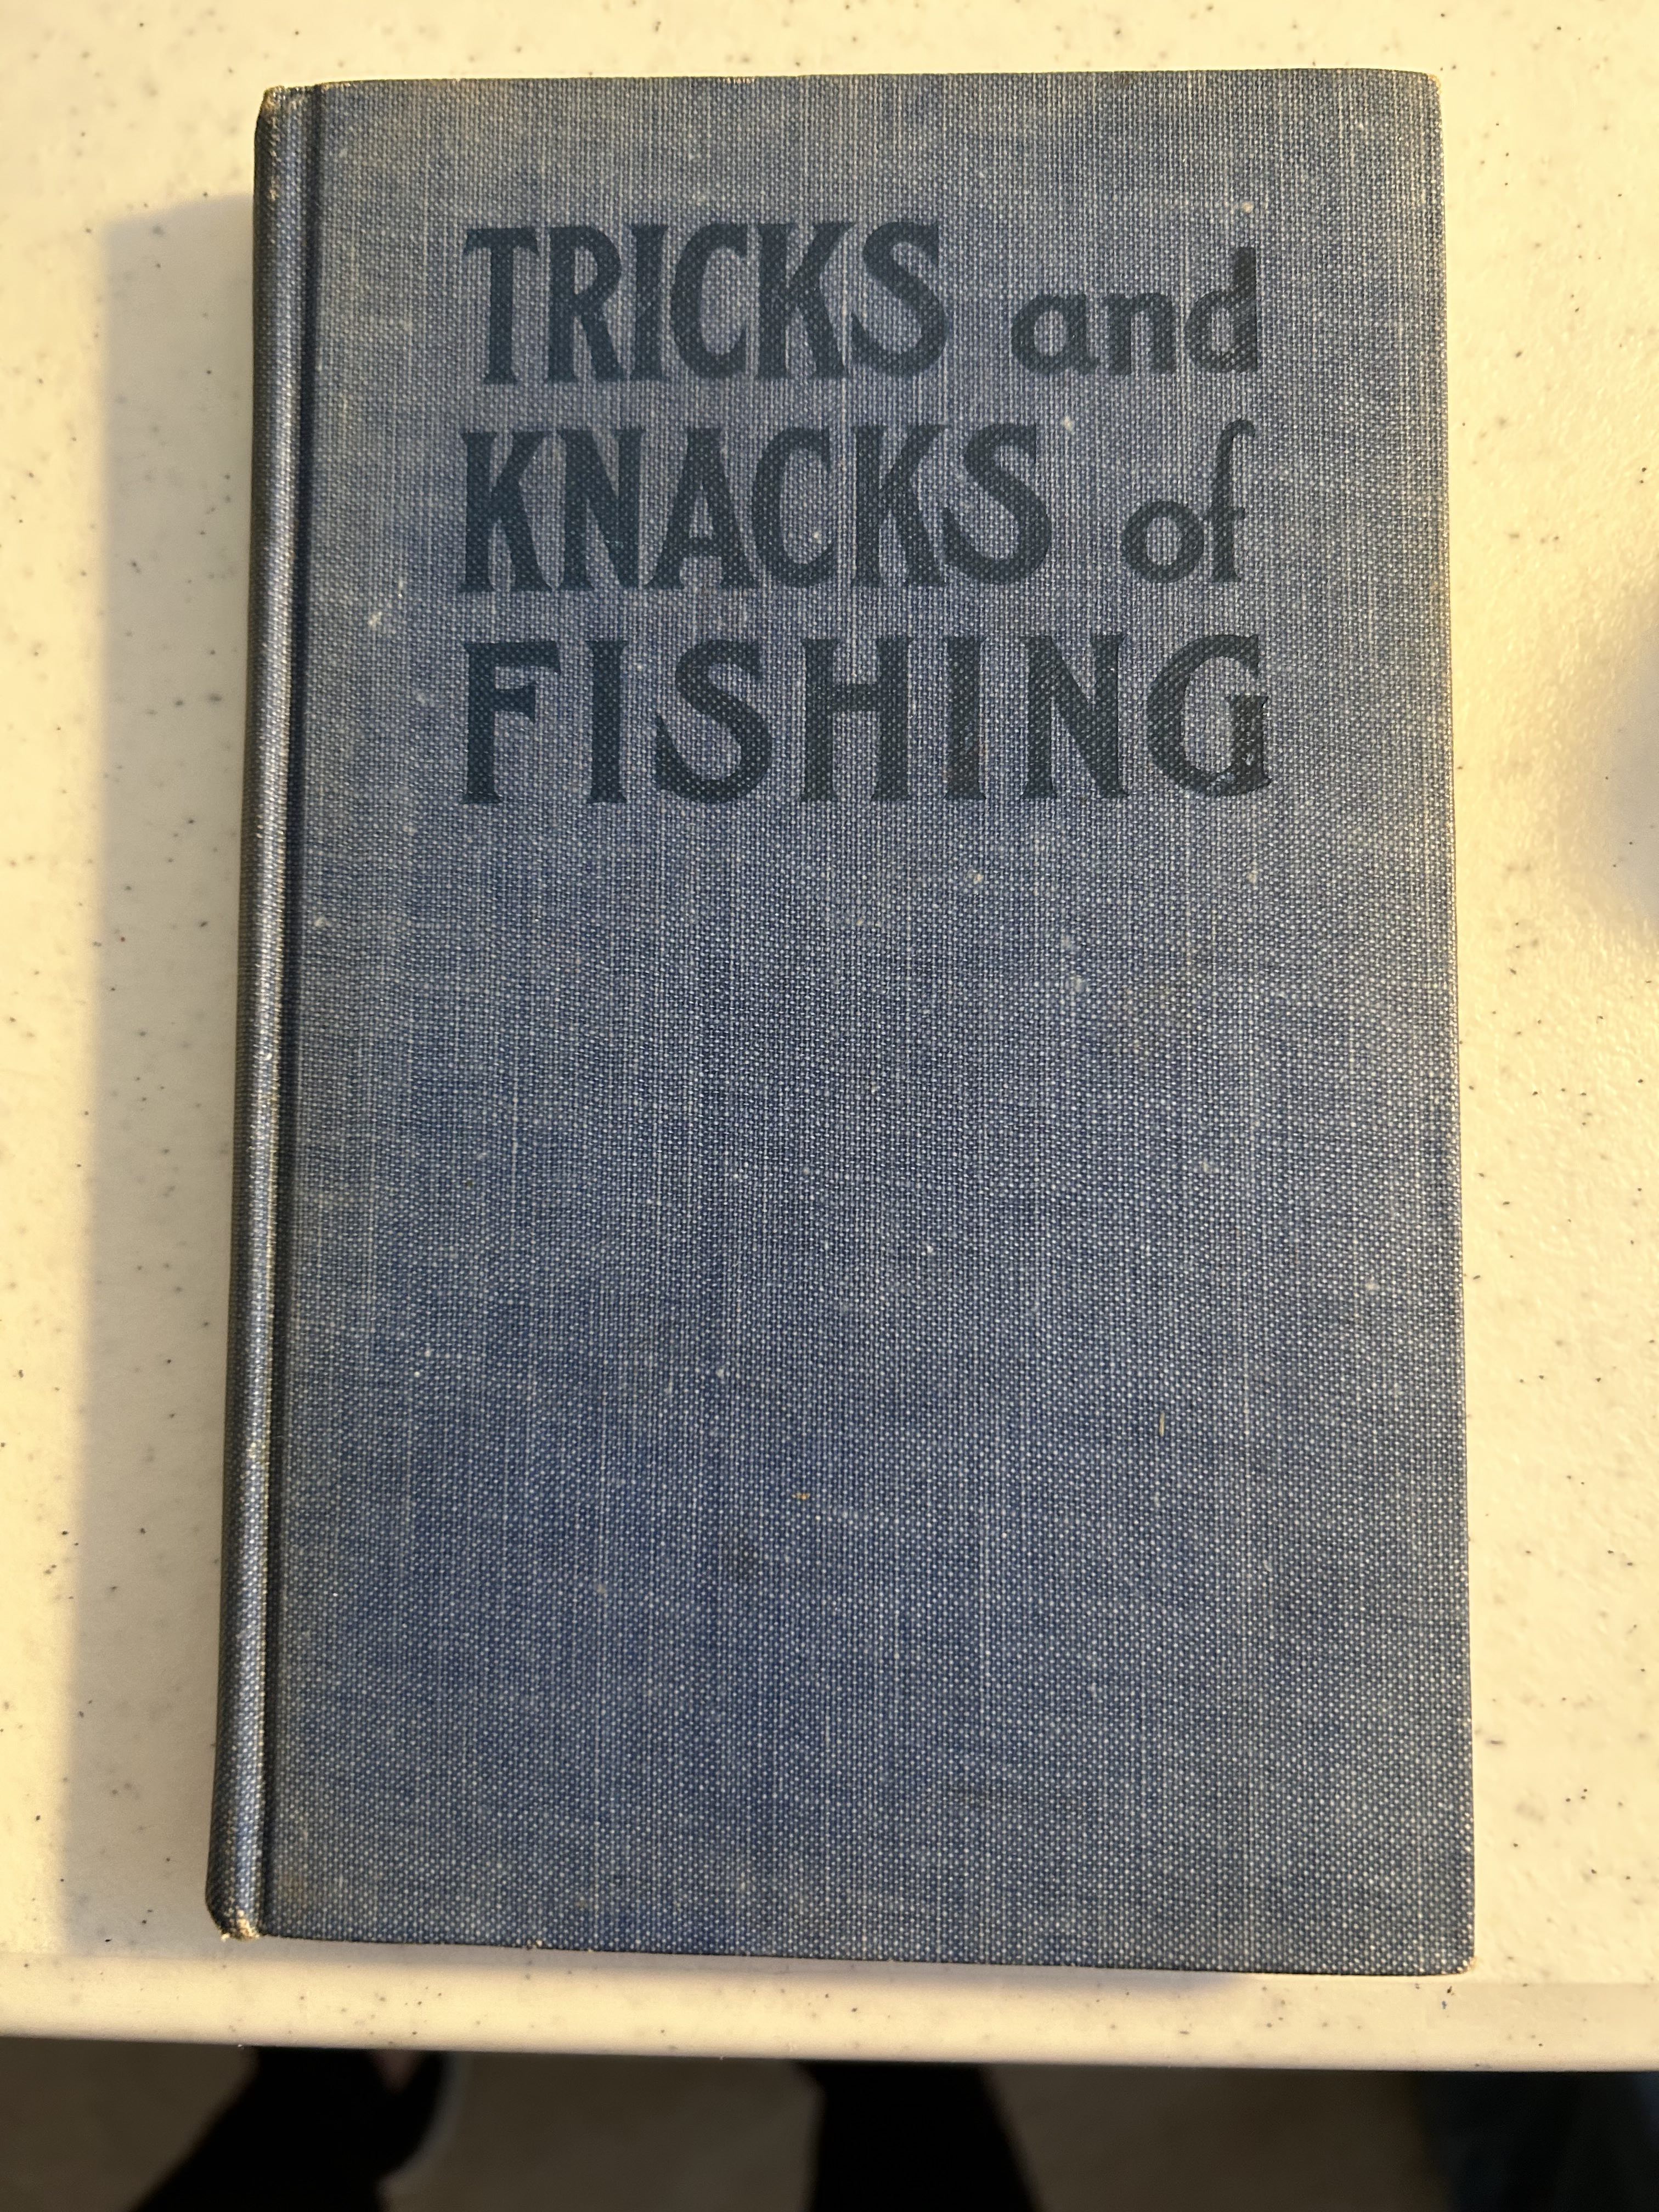 Vintage Fishing Book - Reel Talk - ORCA